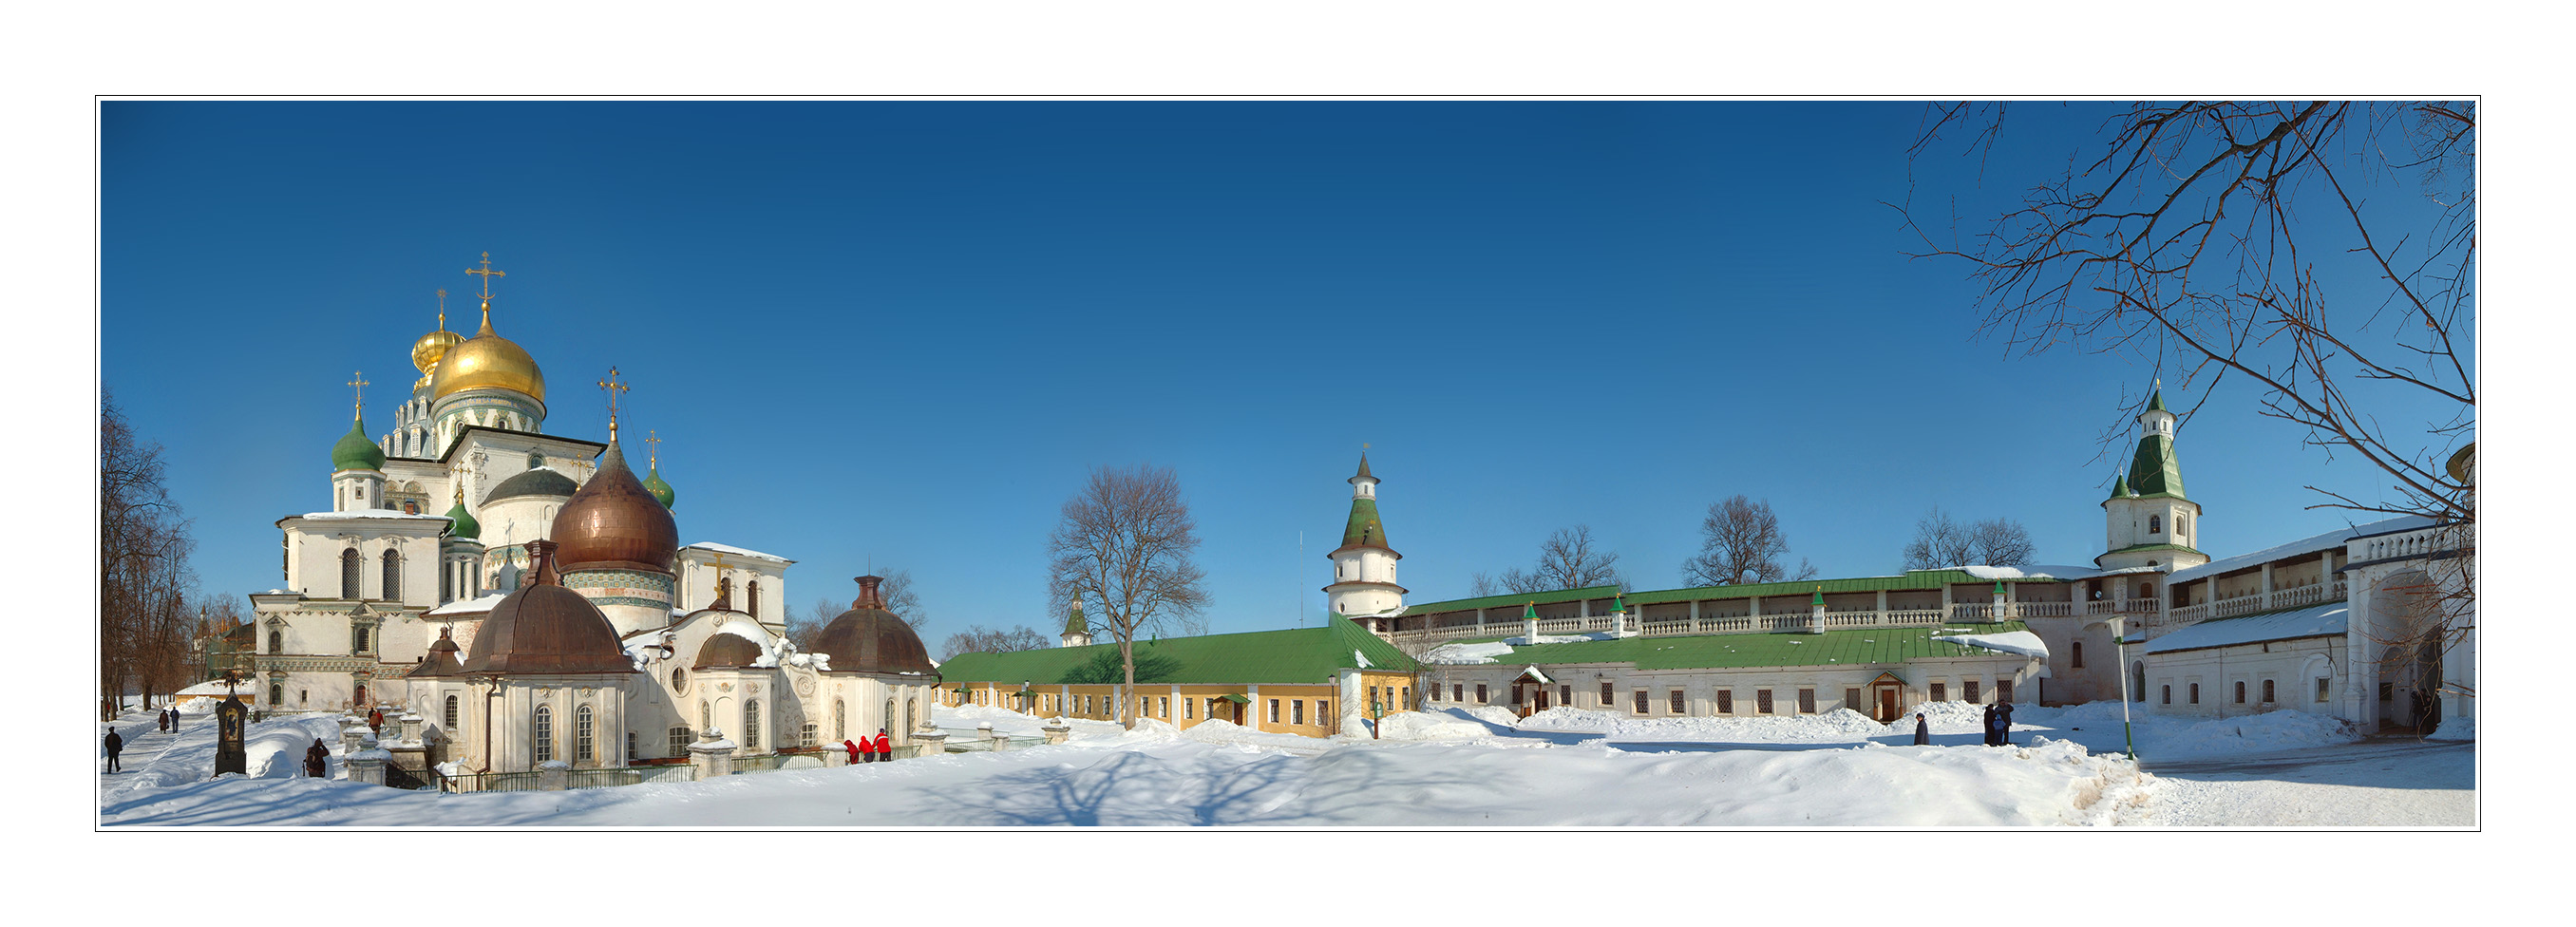 Novy Ierusalim monastery, 30 km from Moscow 8 shots